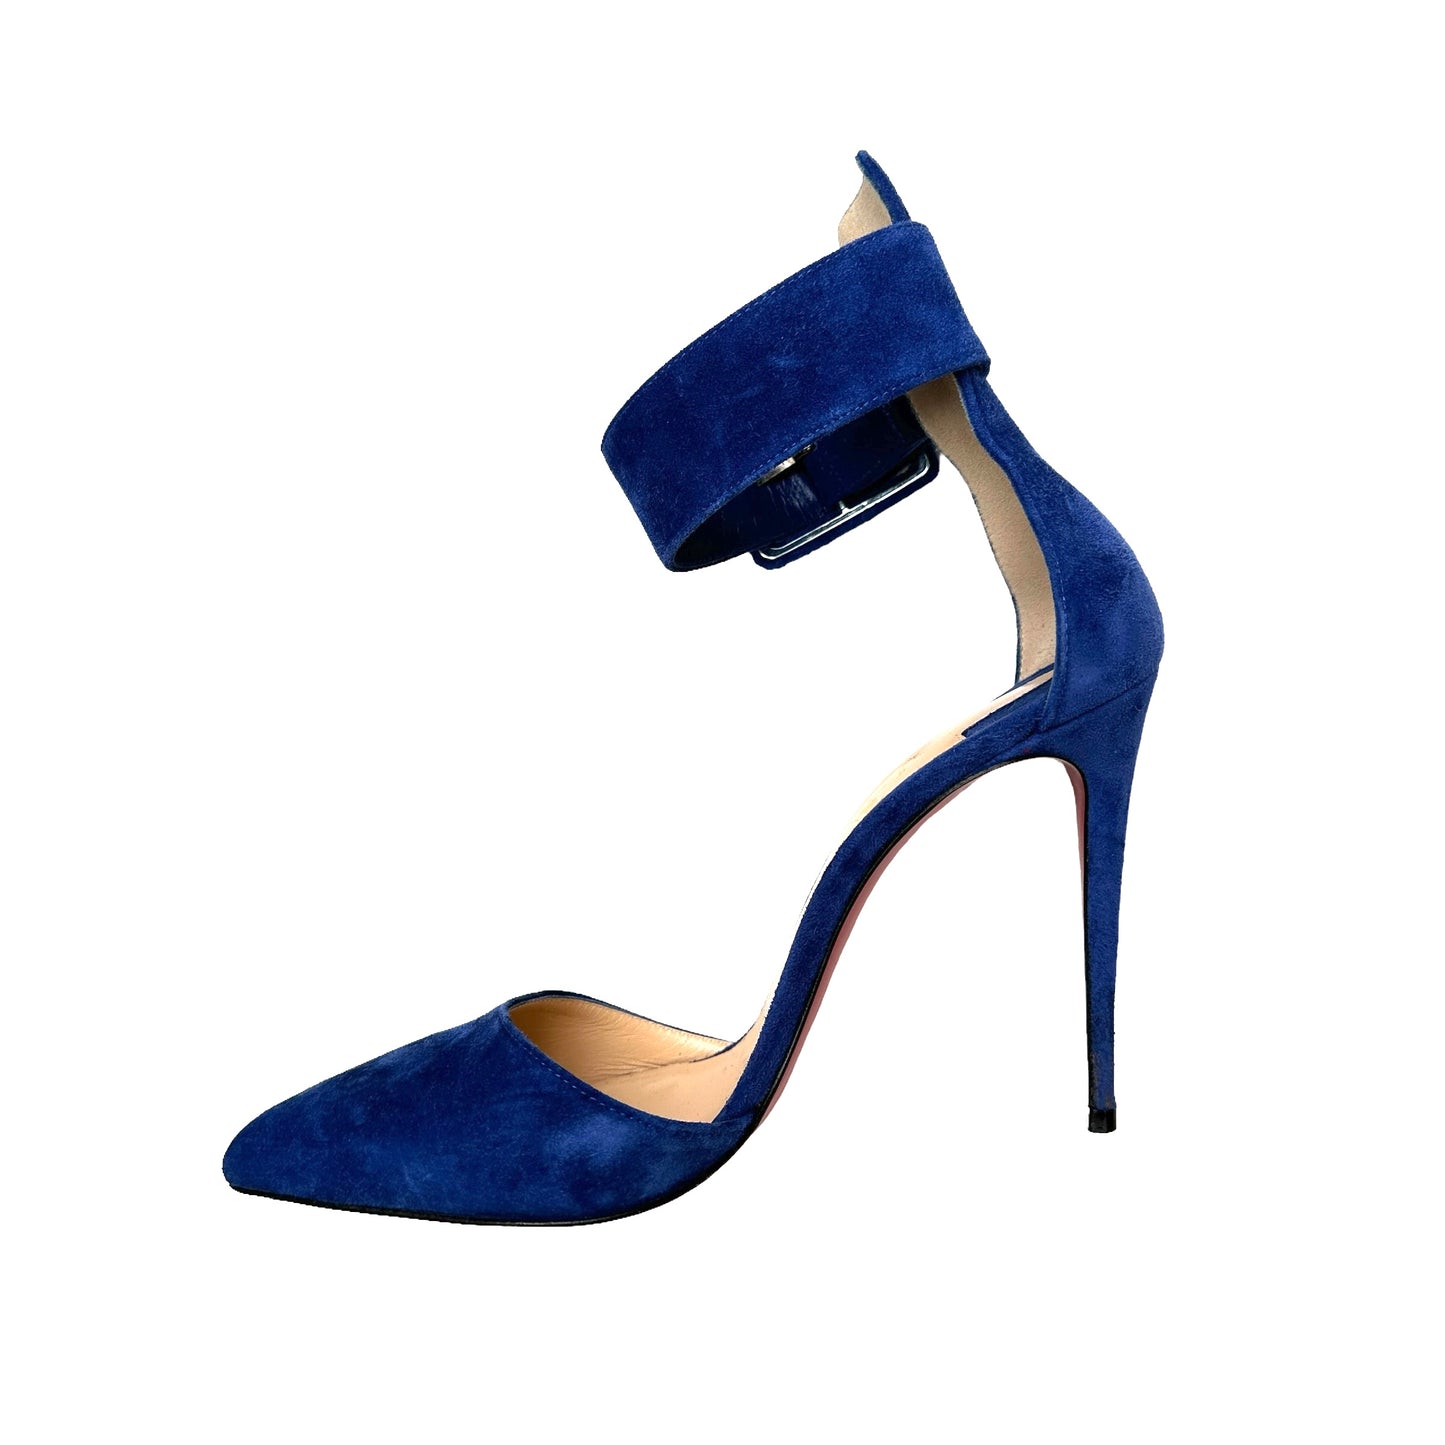 Blue Suede High Heels - 7.5